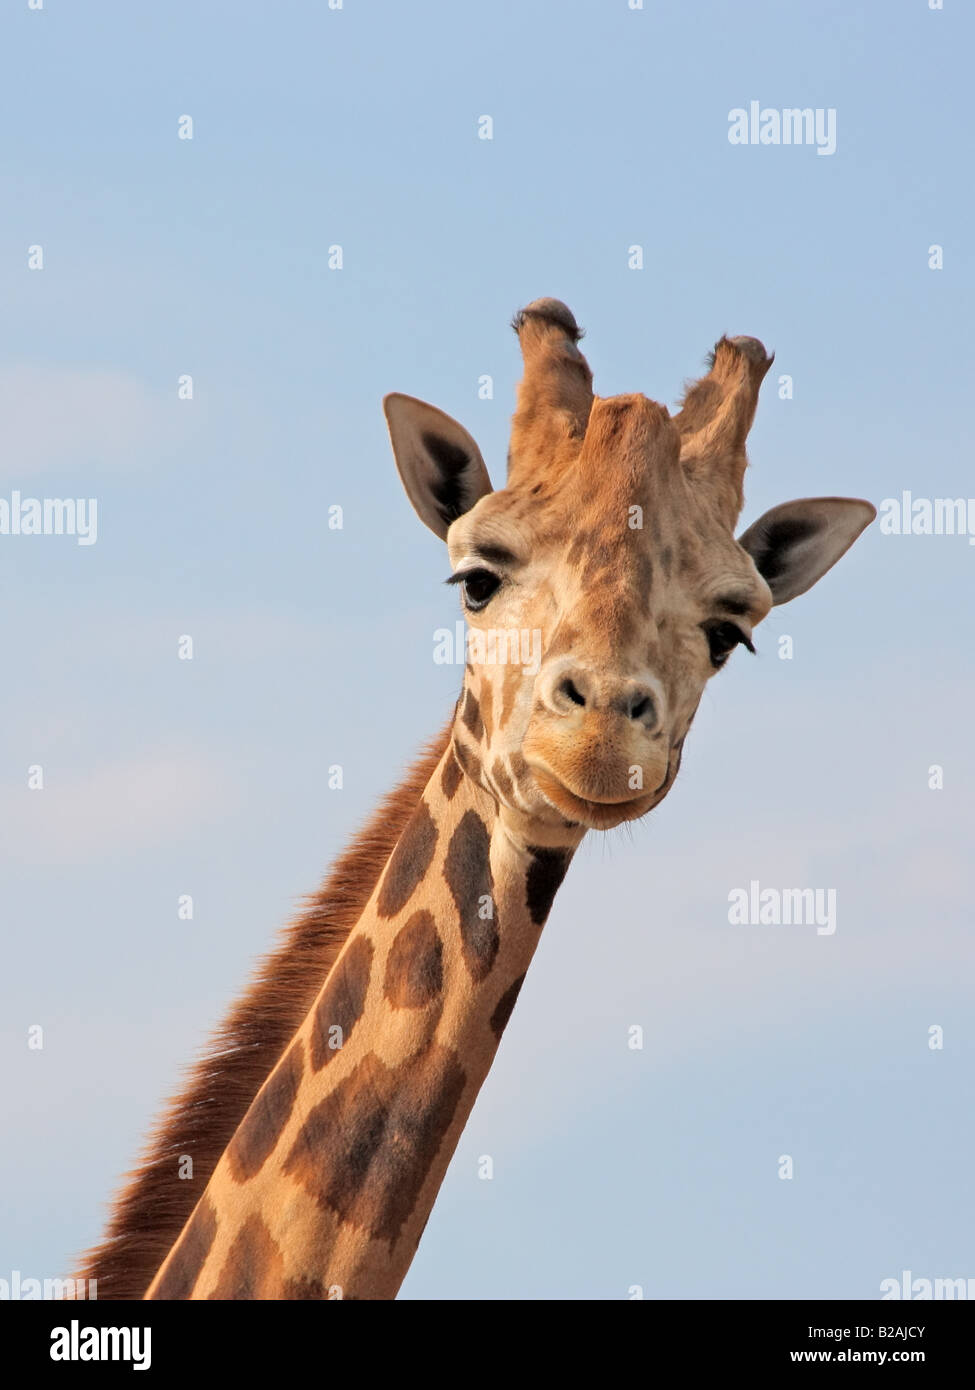 A giraffe posing and looking straight at the camera Stock Photo